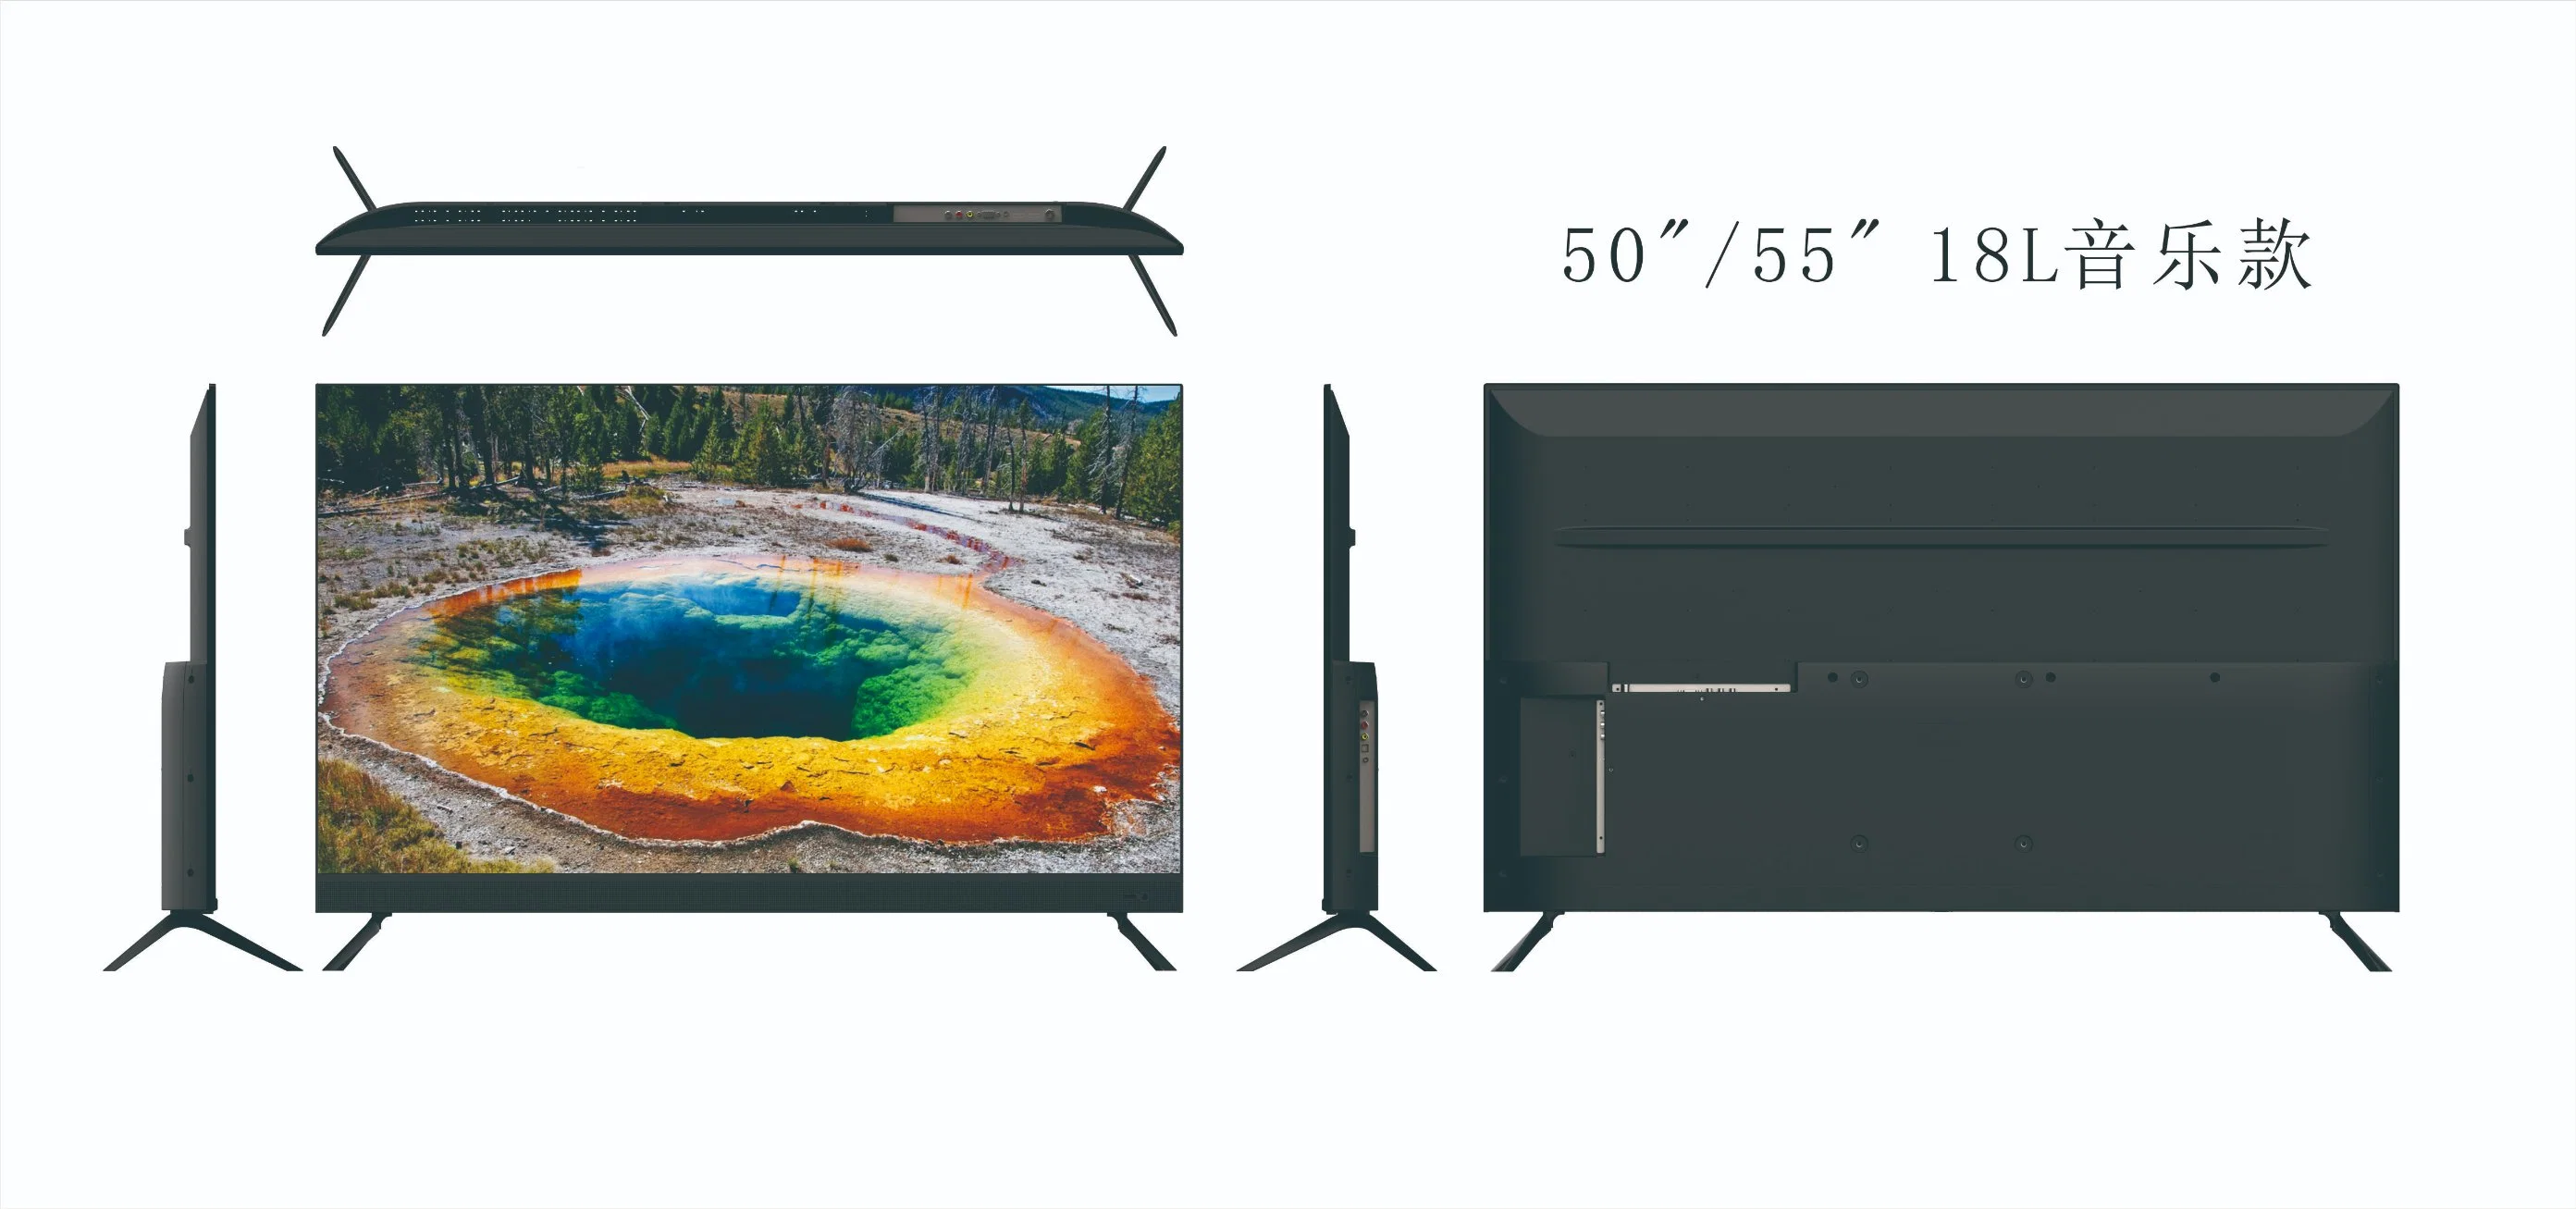 Bester Fabrikpreis 55 Zoll LCD LED-Fernseher mit DVB-T2 S2 Digitalsystem